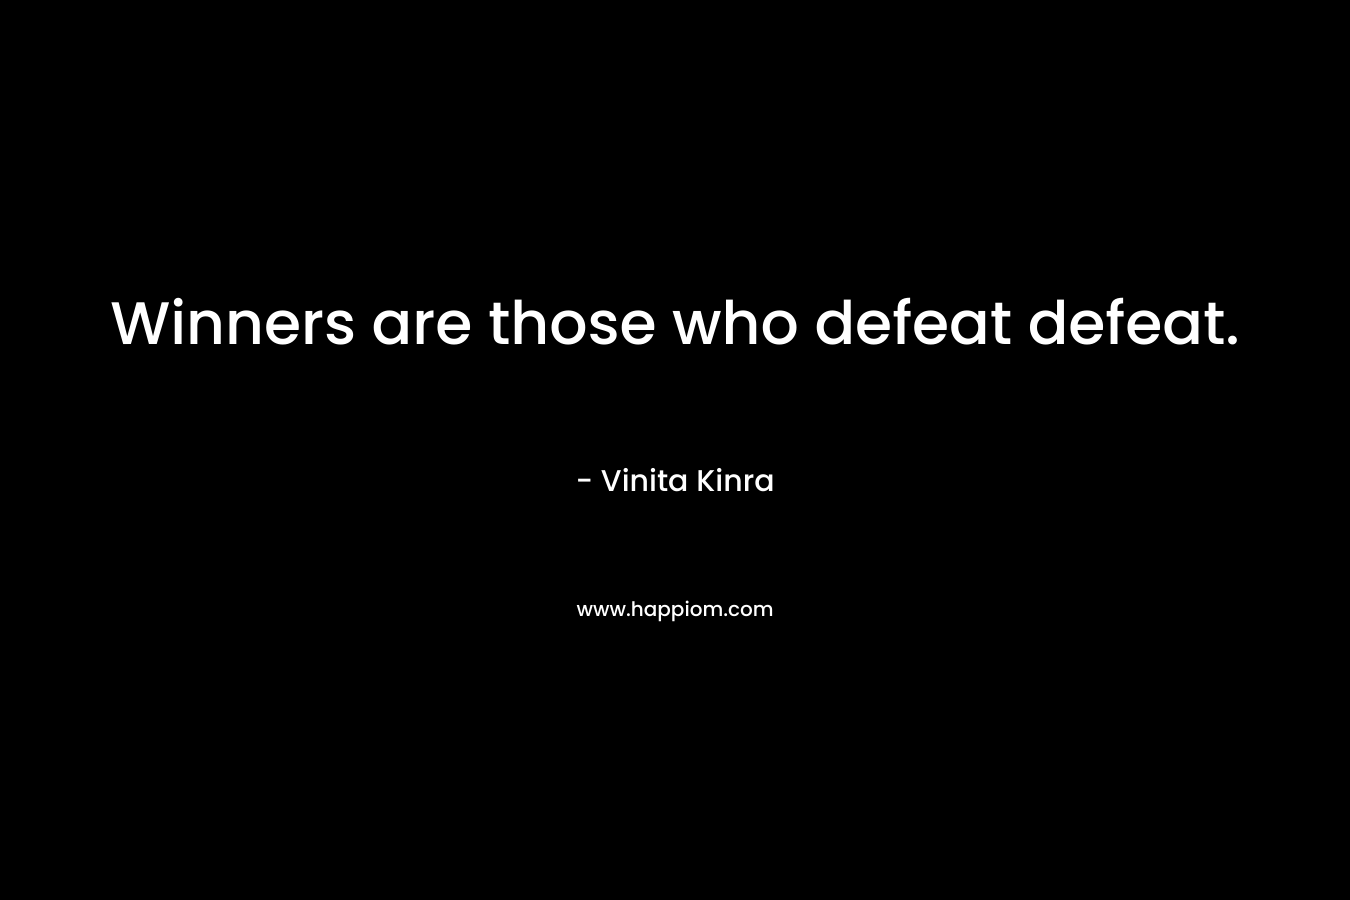 Winners are those who defeat defeat. – Vinita Kinra